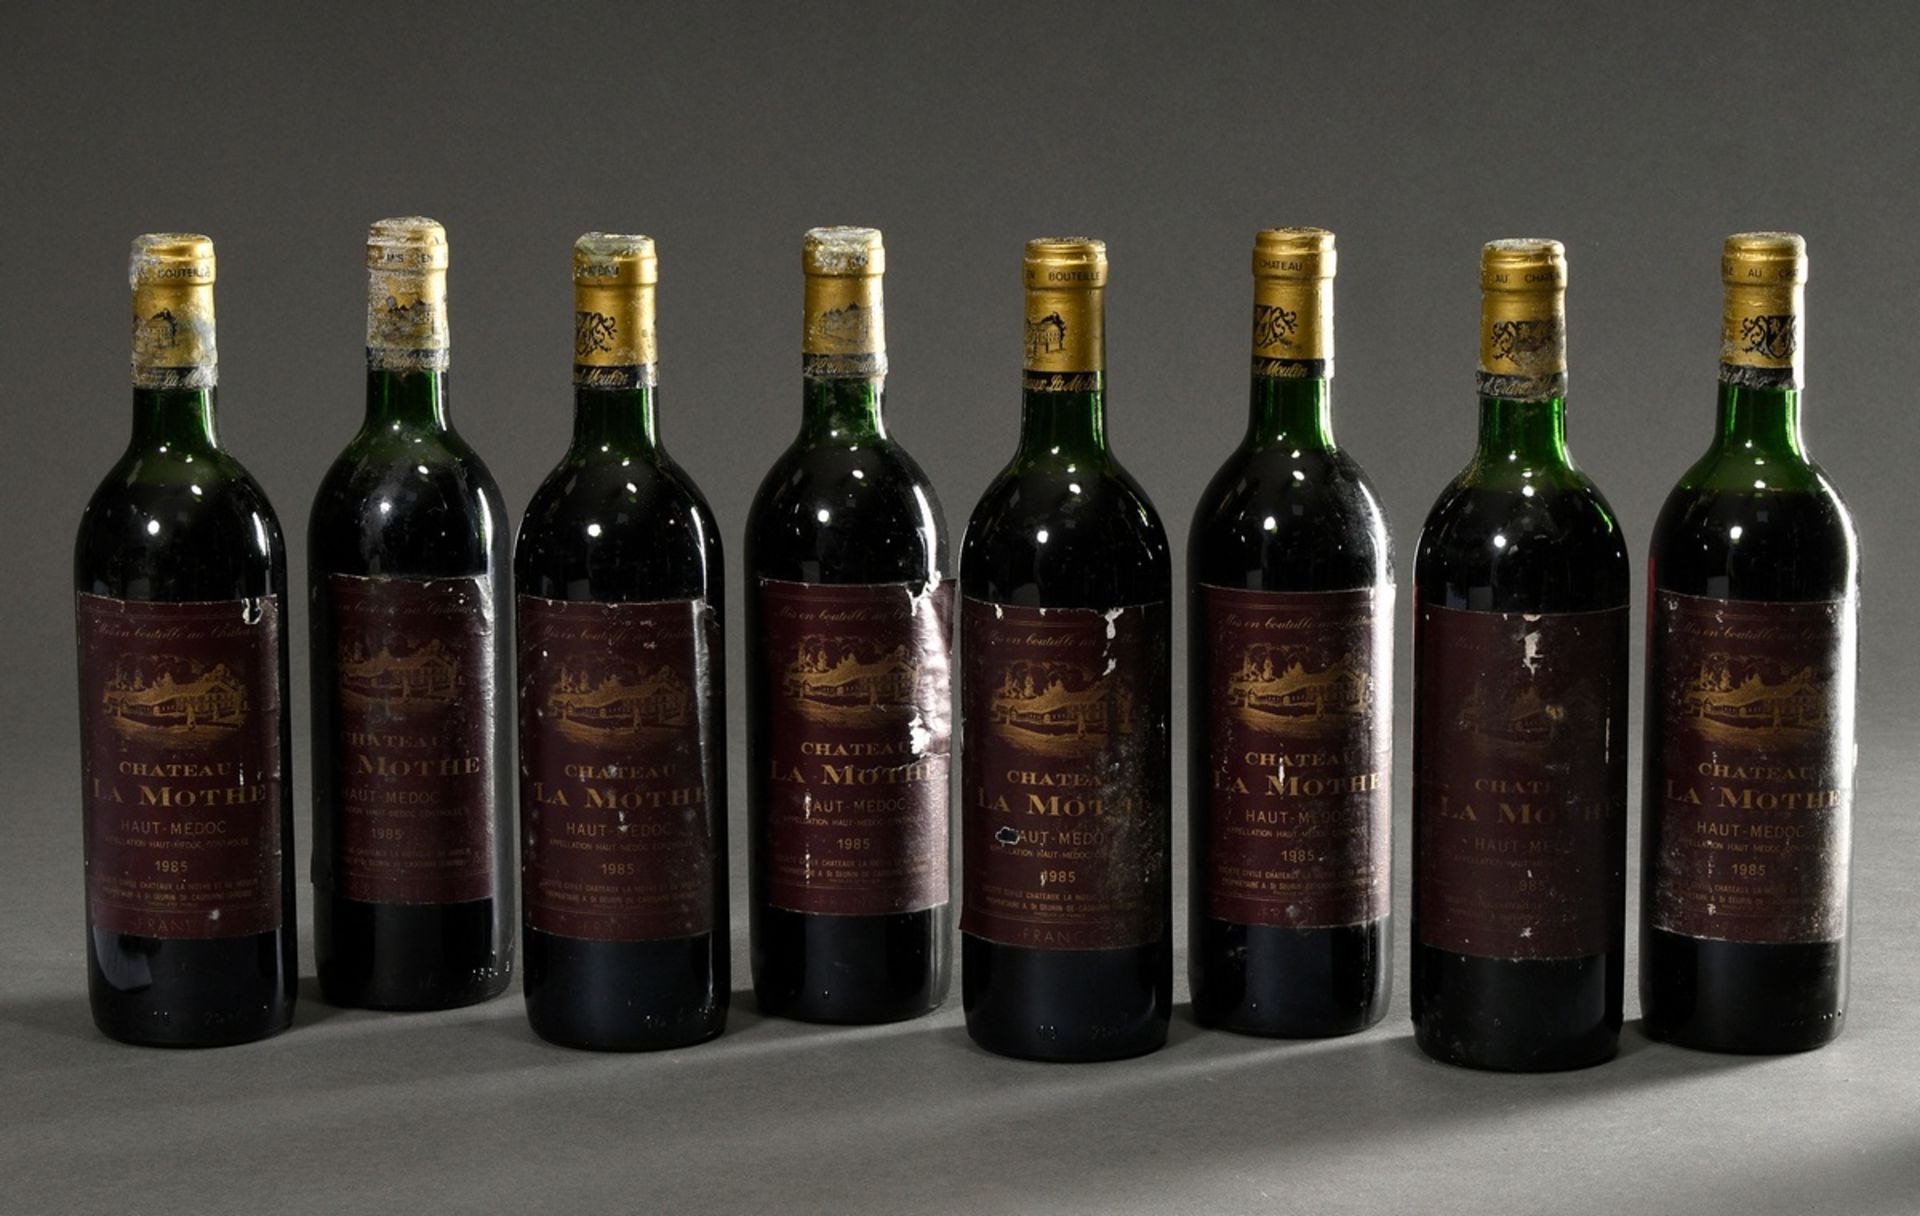 6 Bottles 1985 Chateau La Mothe, mebac, Haut Medoc, France, red wine, 0,75l, good cellar storage th